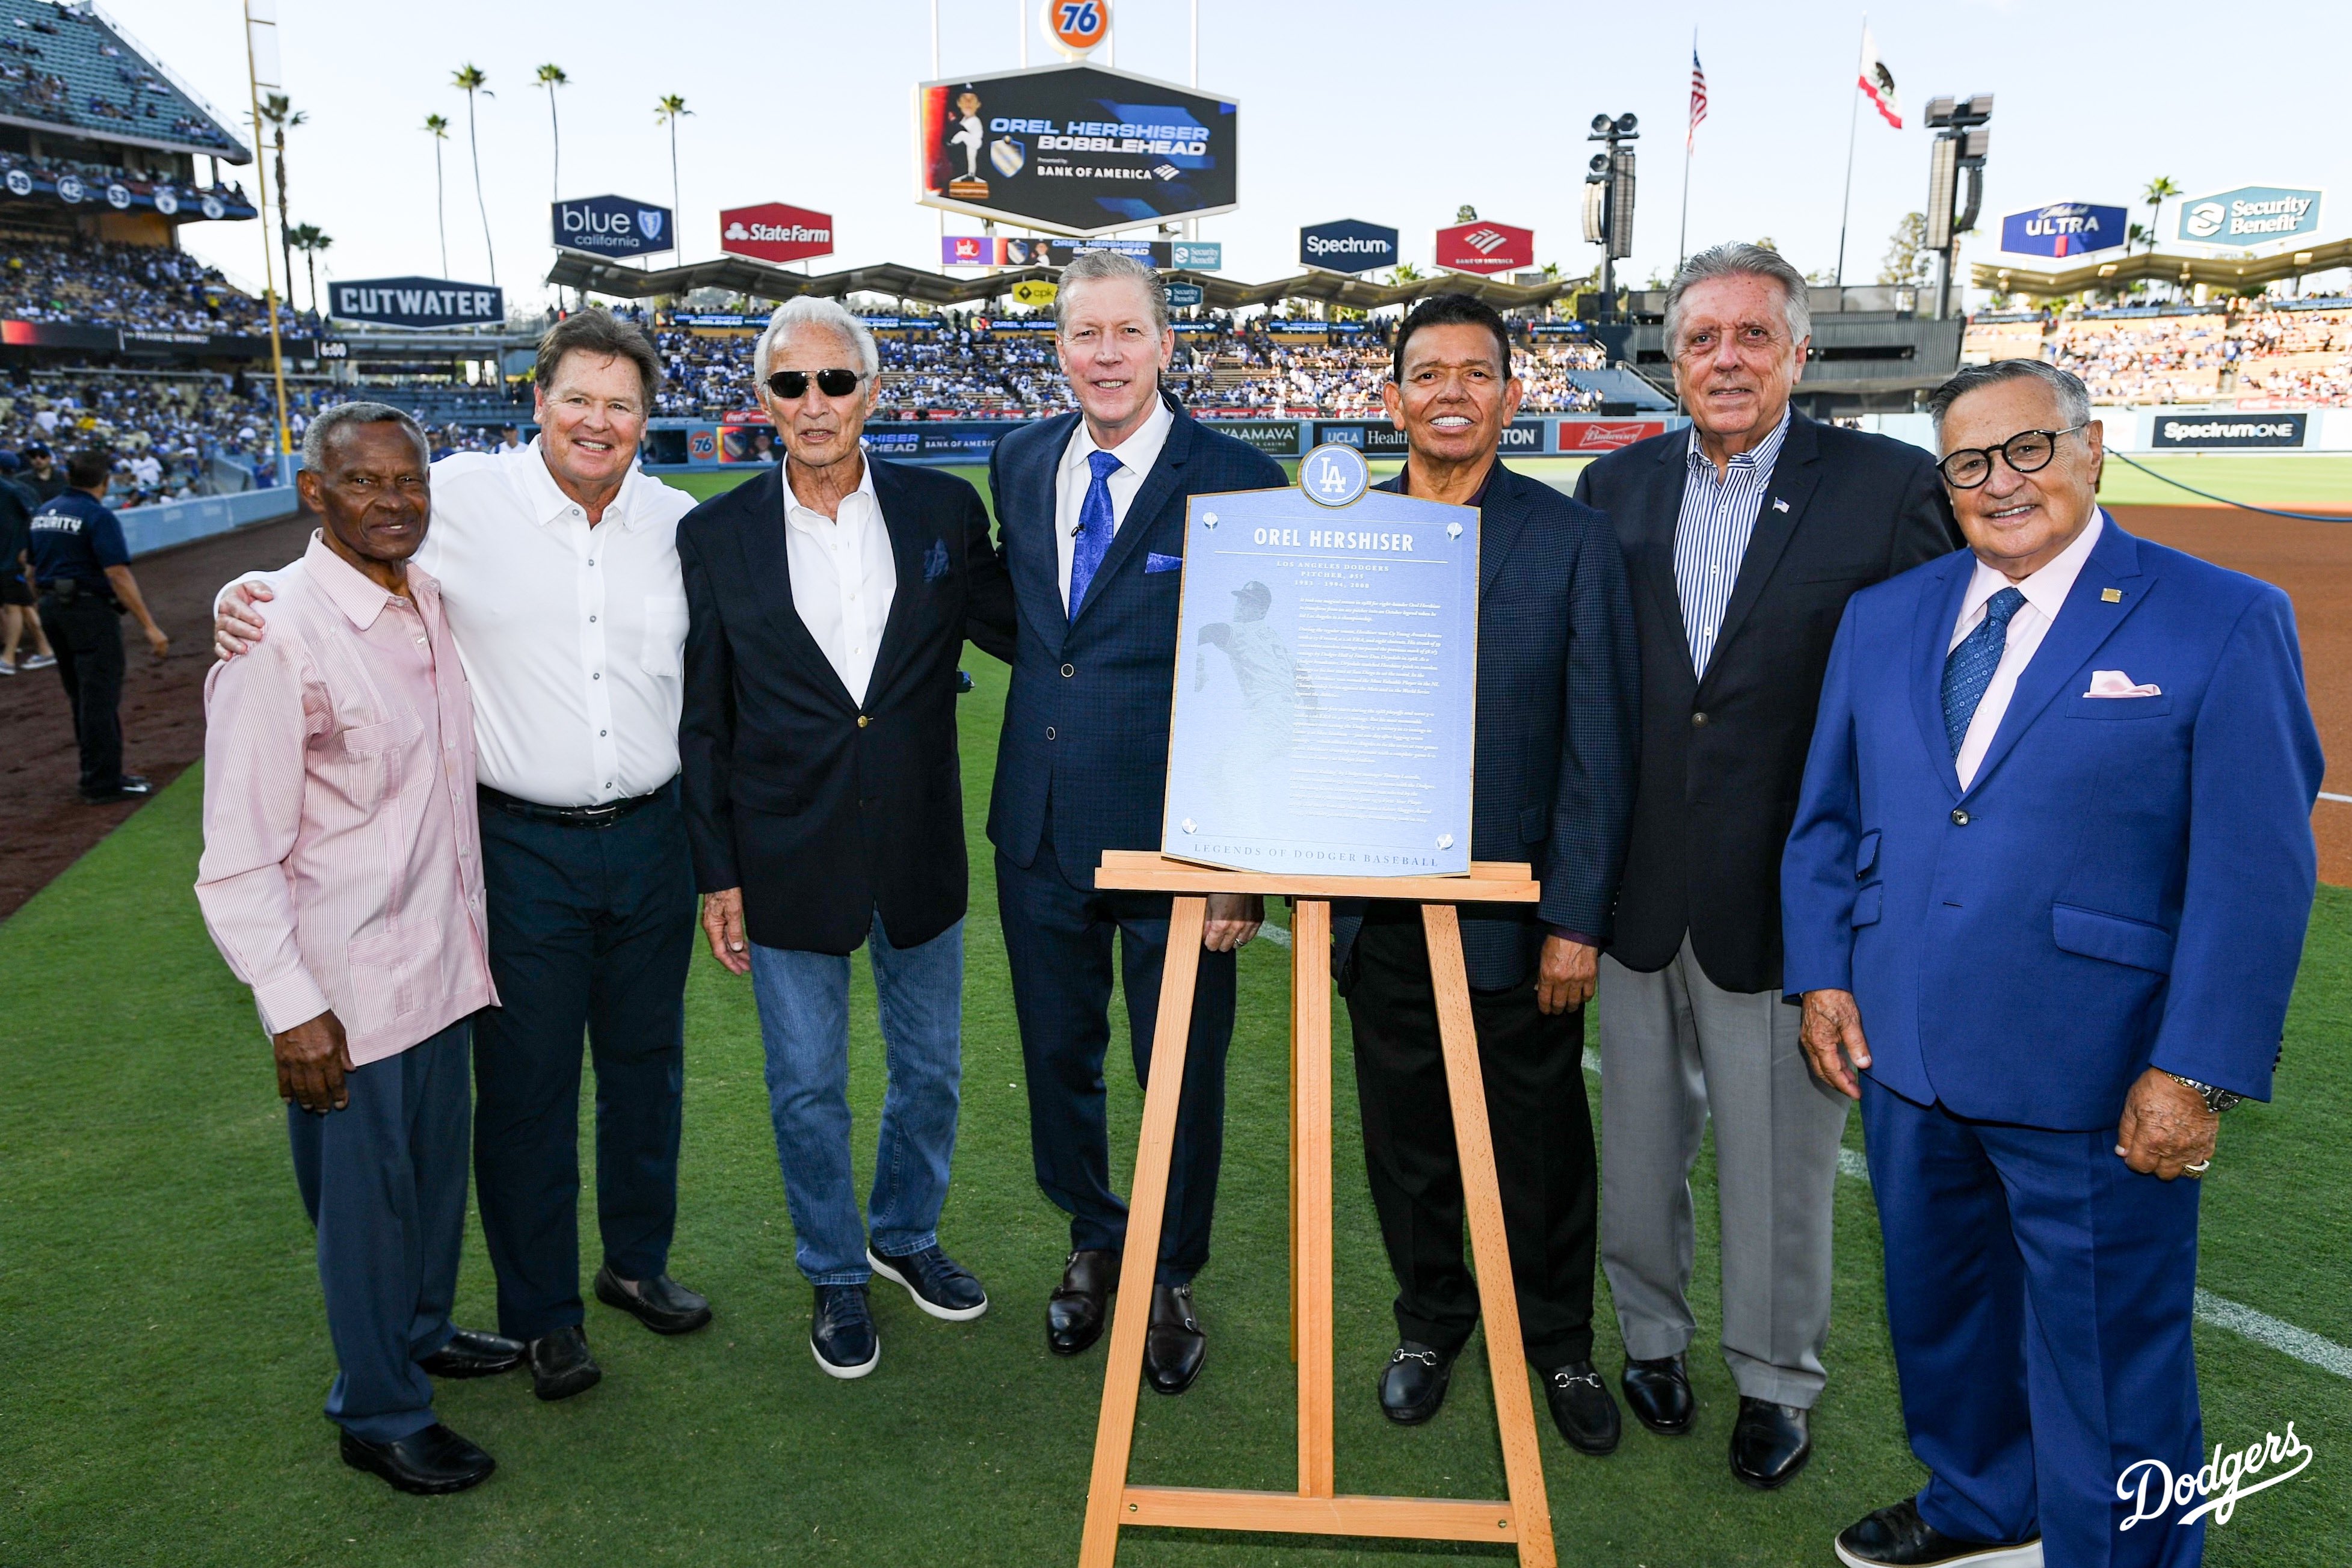 Los Angeles Dodgers on X: Celebrating a legend. Congratulations